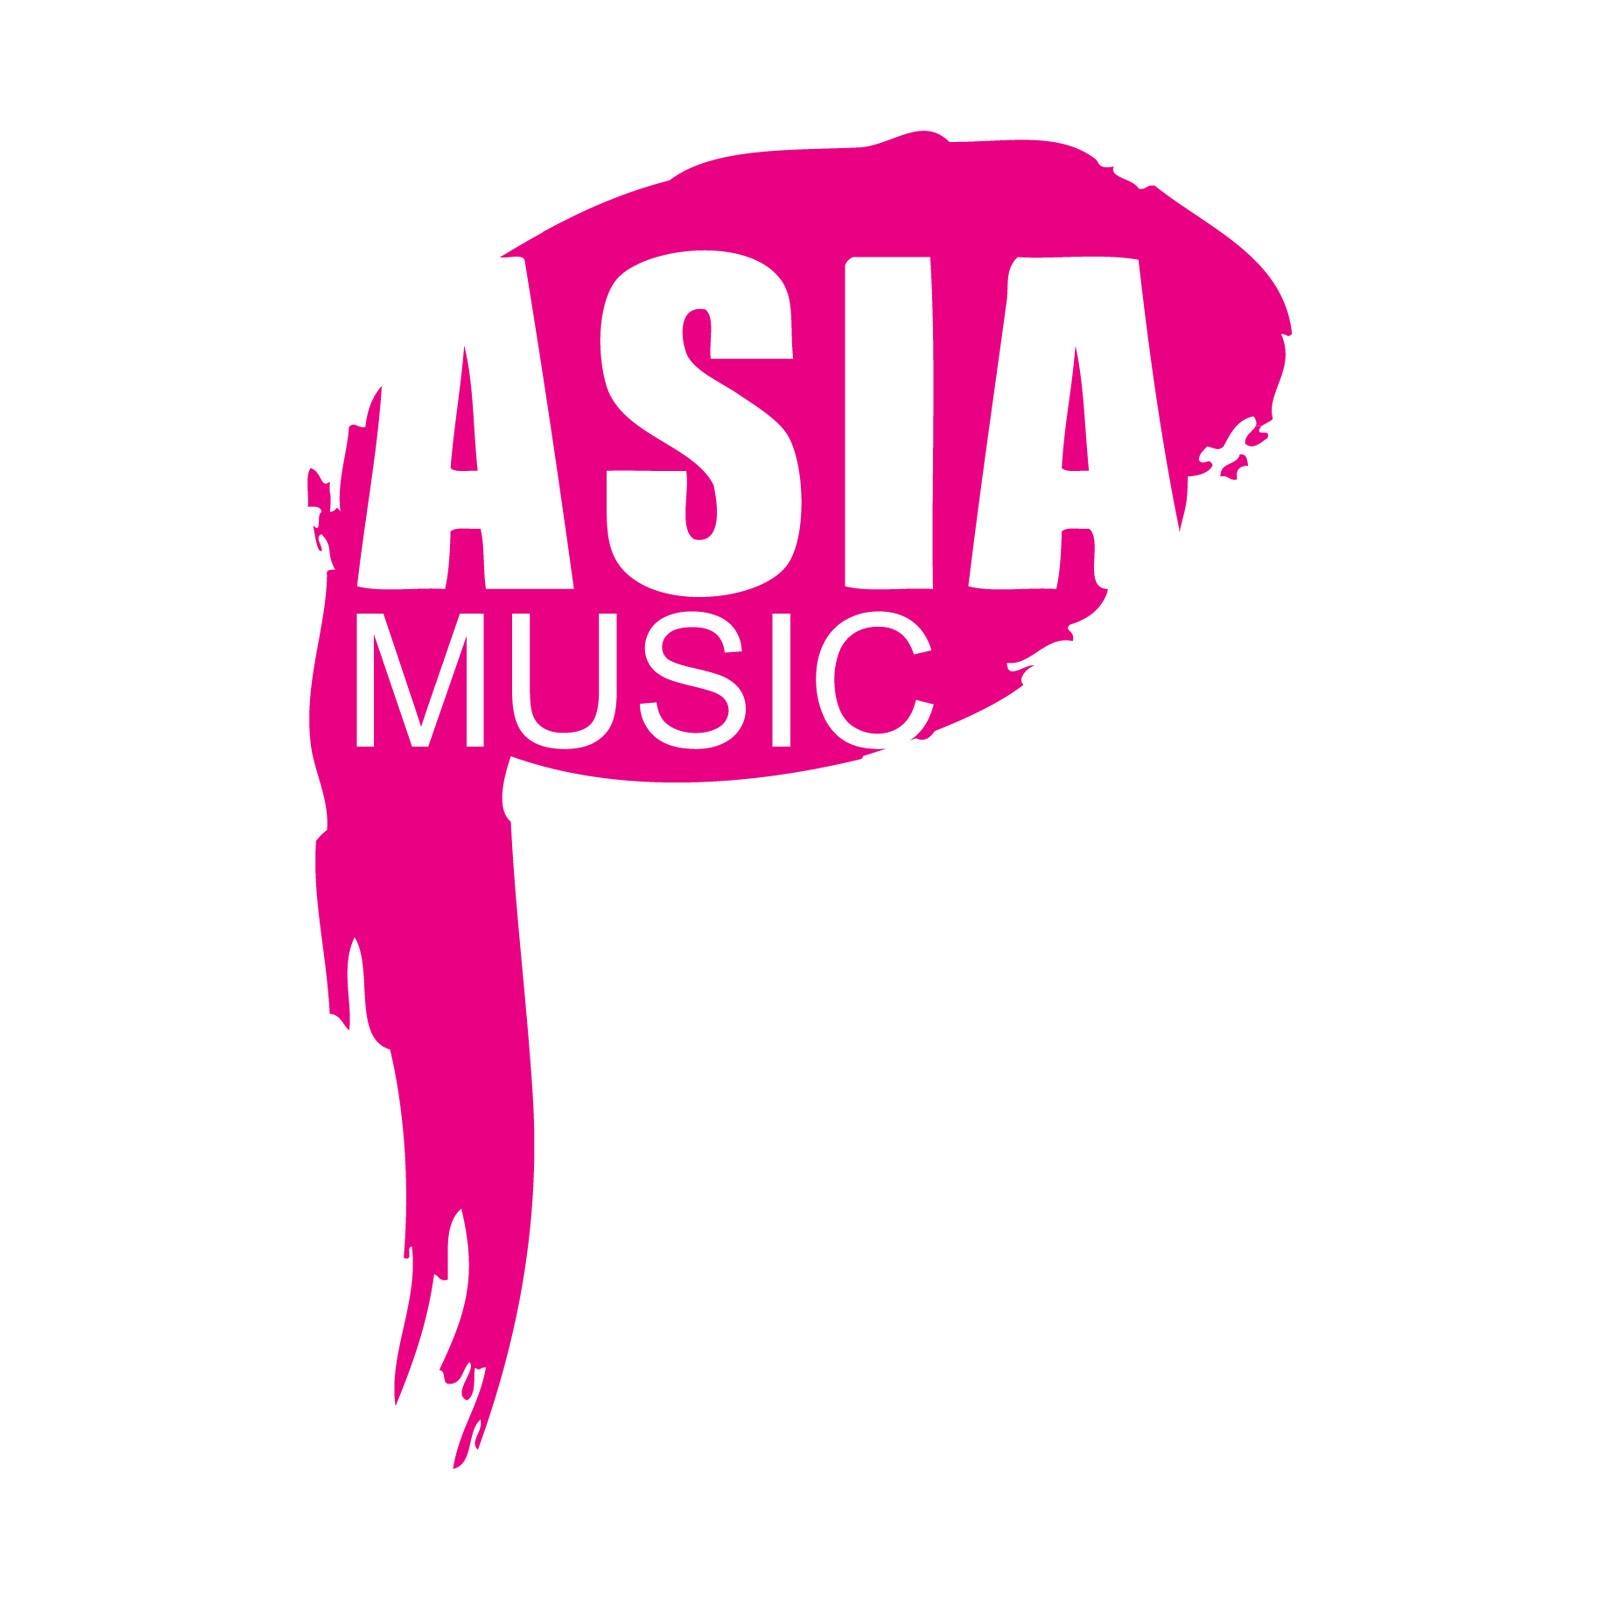 Asia Music School @ Yishun Central